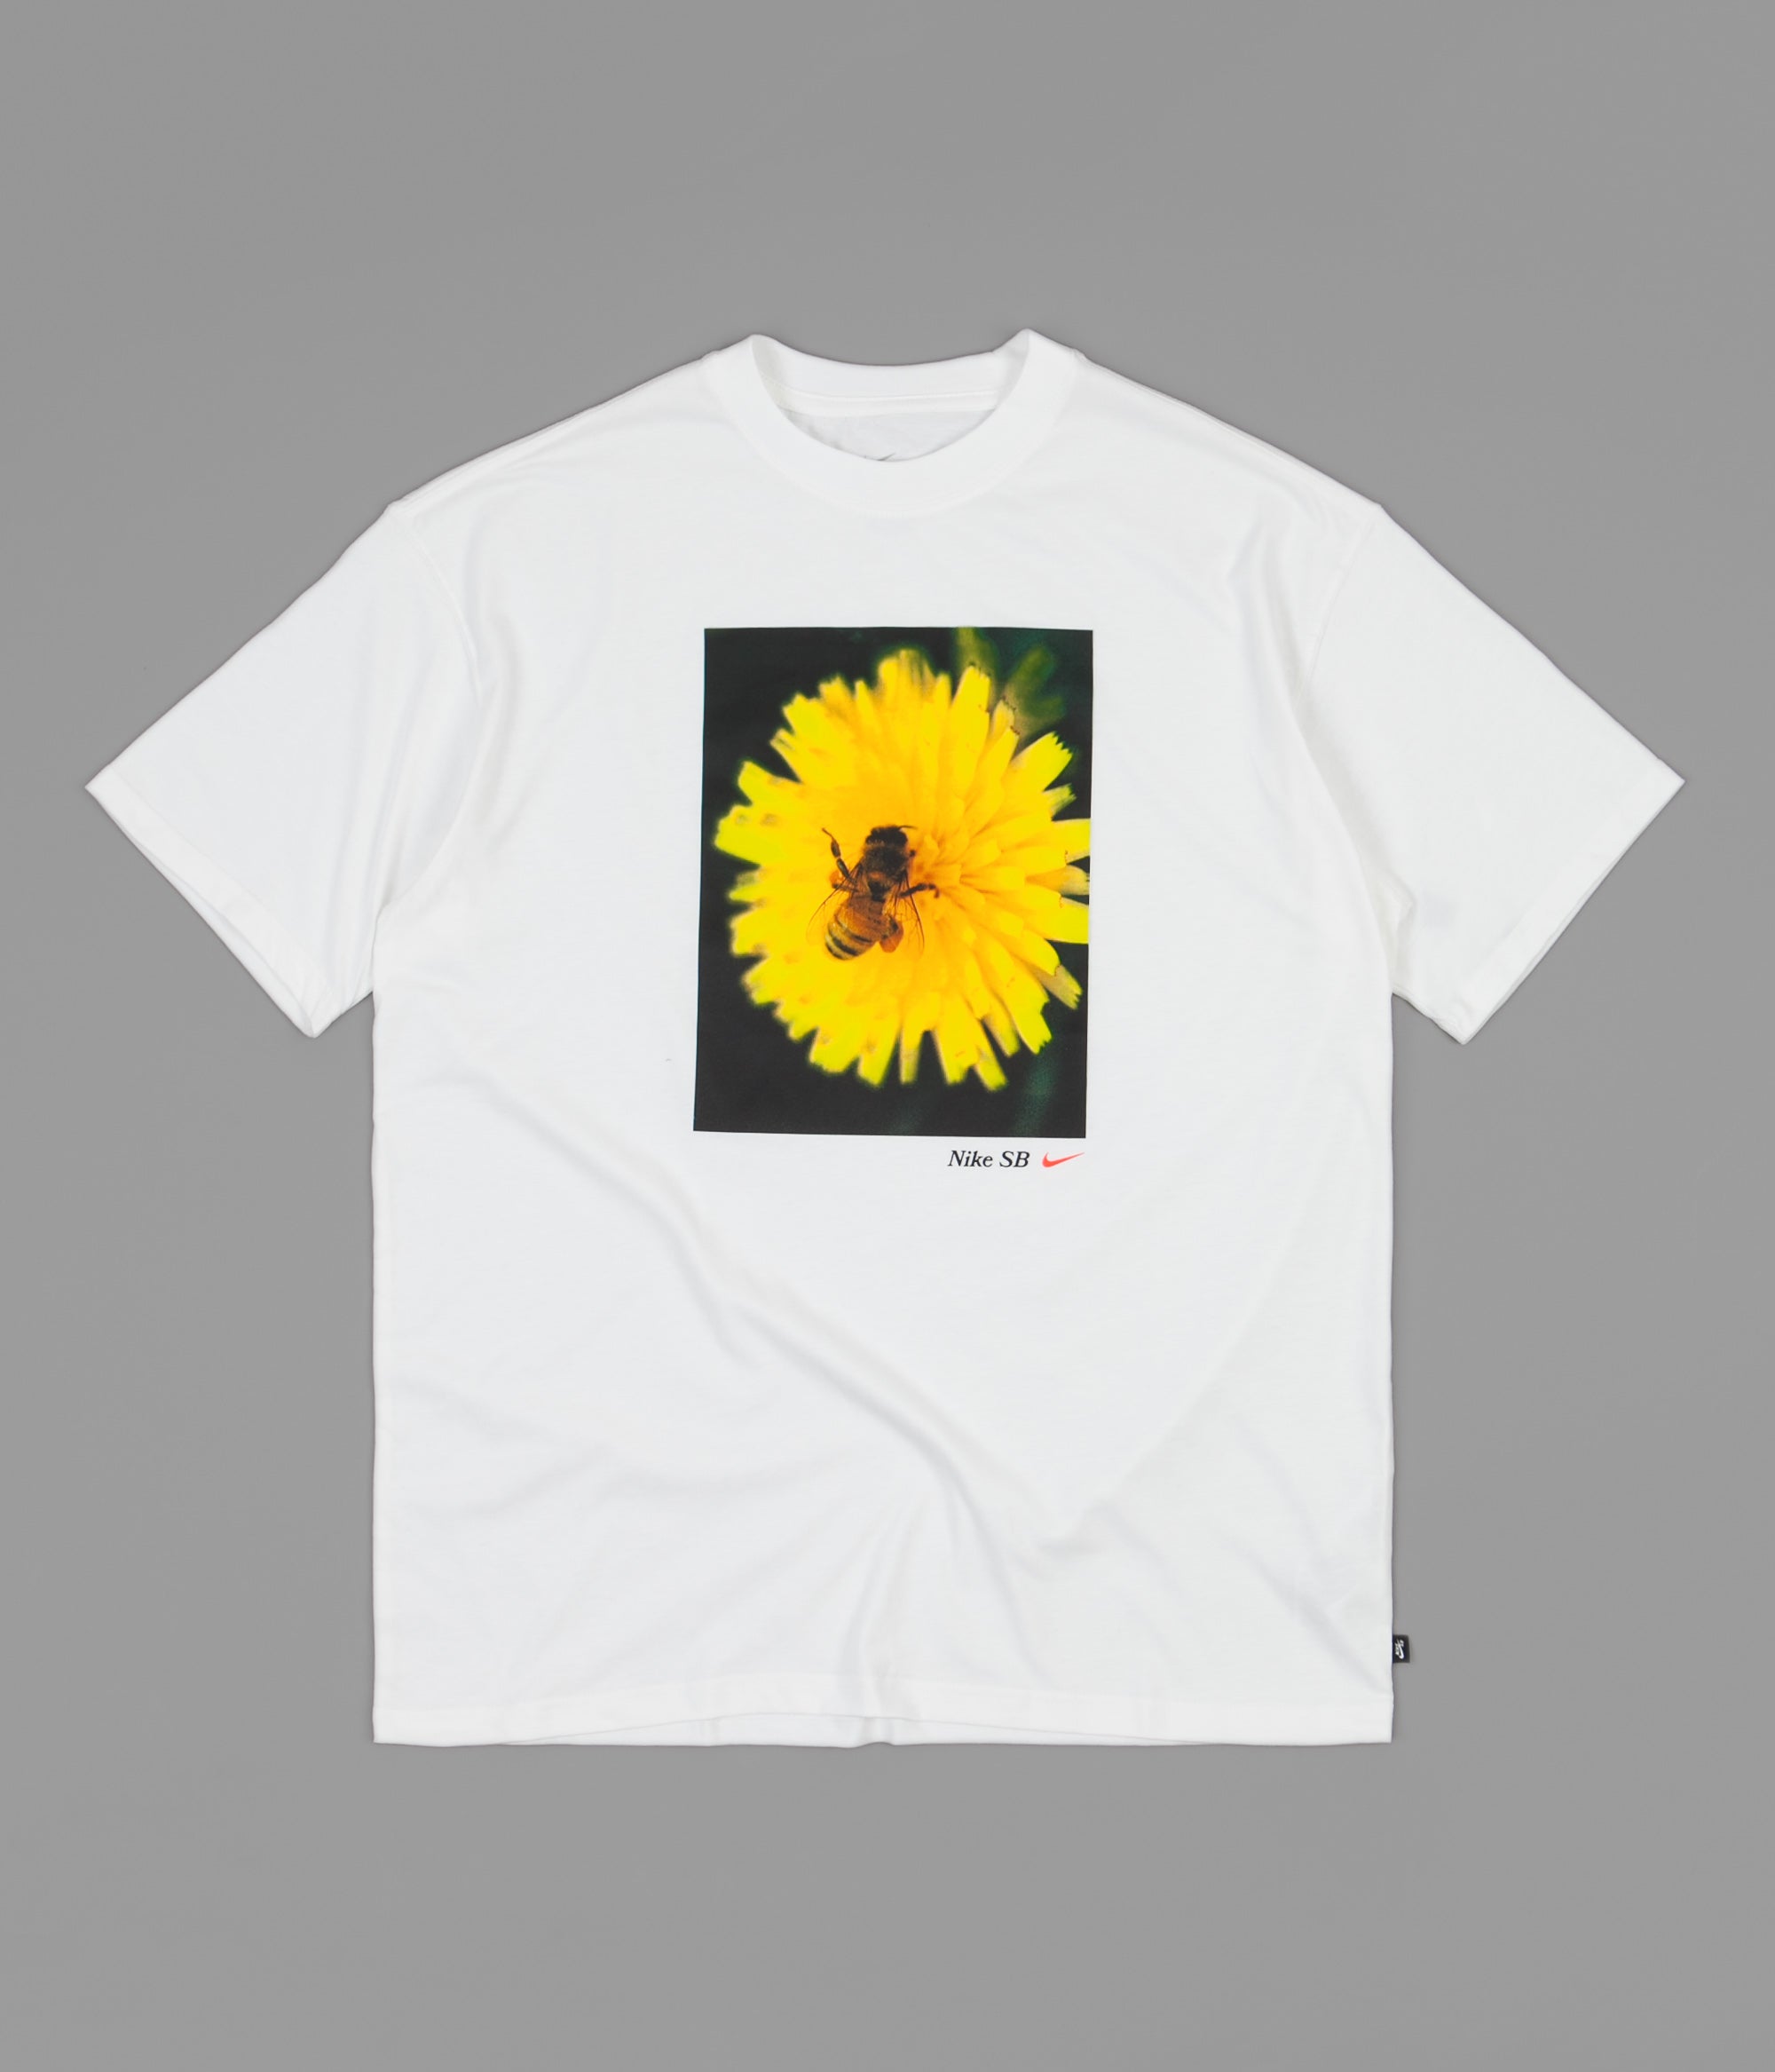 nike sunflower seed shirt